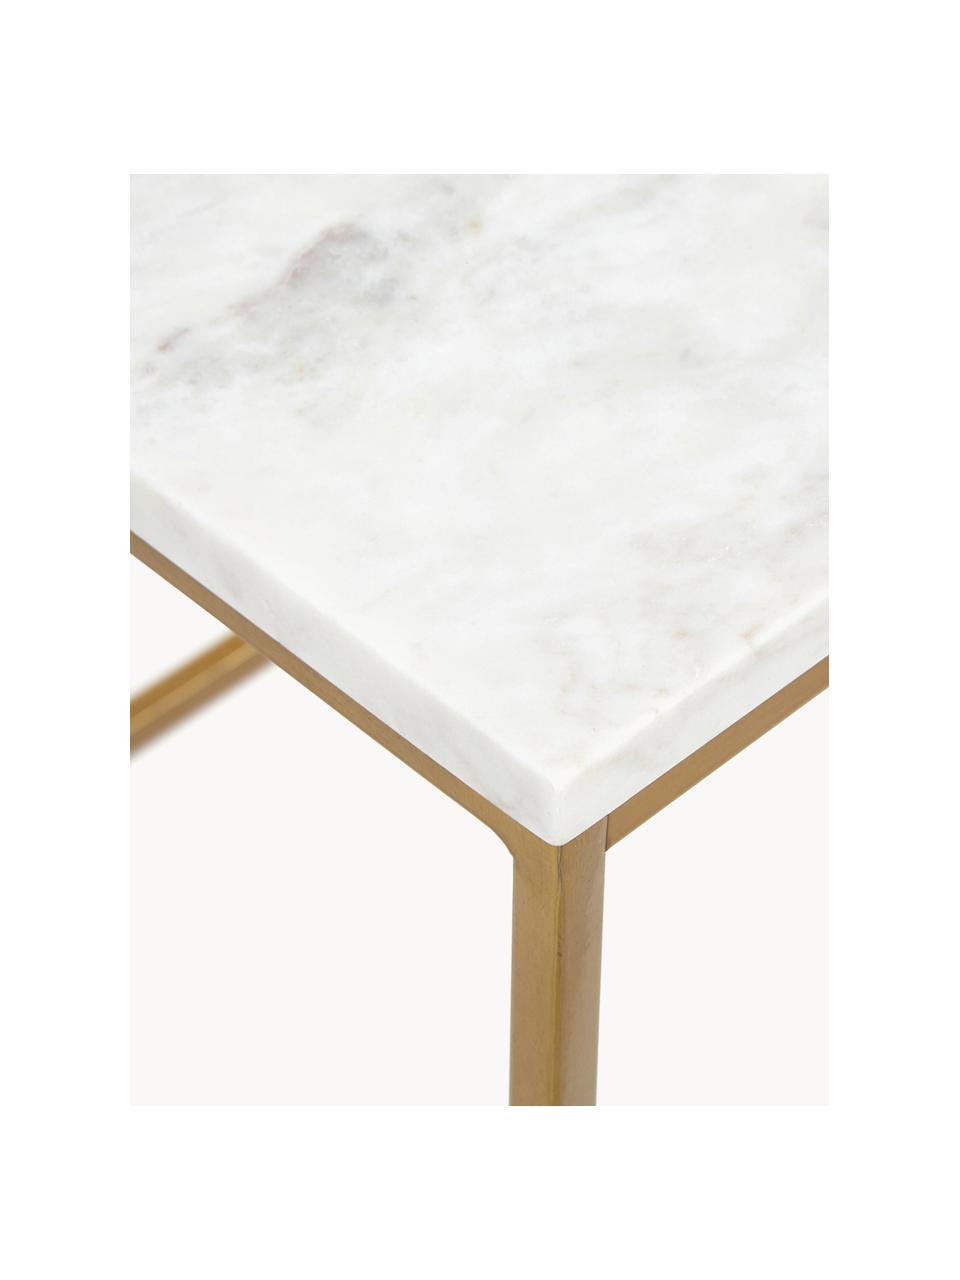 Marmor-Beistelltisch Alys, Tischplatte: Marmor, Gestell: Metall, pulverbeschichtet, Weiss marmoriert, Goldfarben, B 45 x H 50 cm